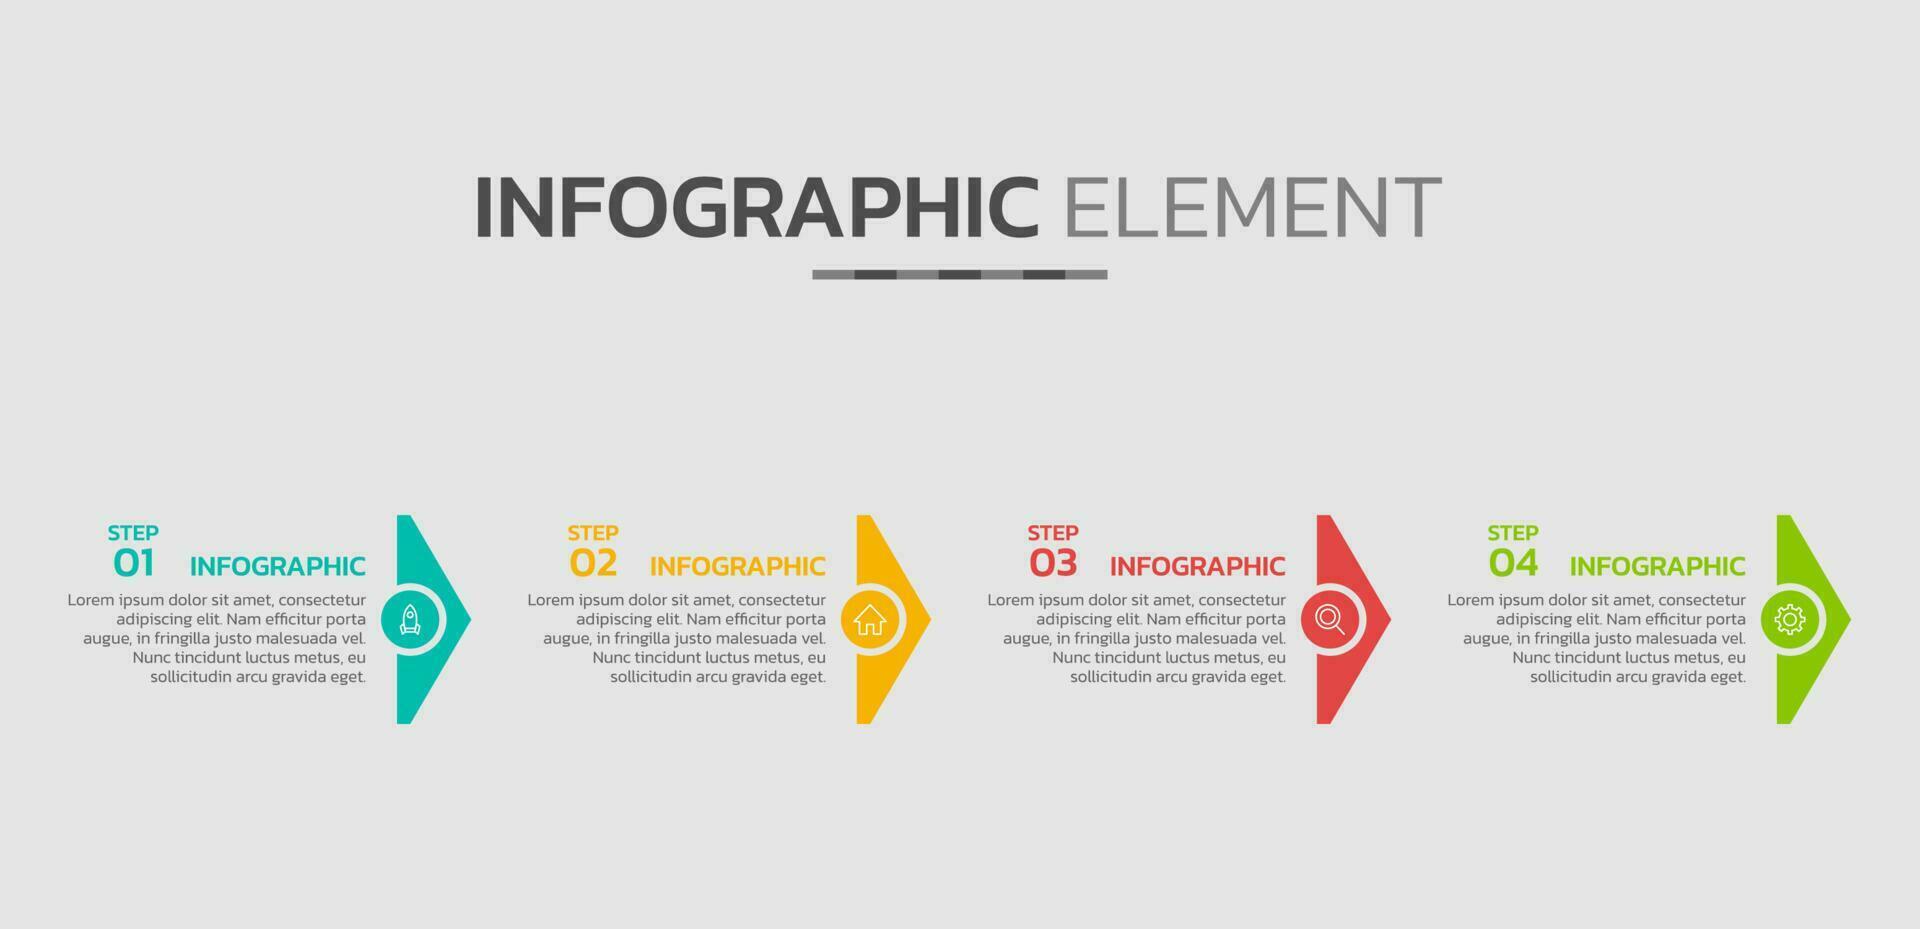 kreativ Infografik Design Vorlage vektor